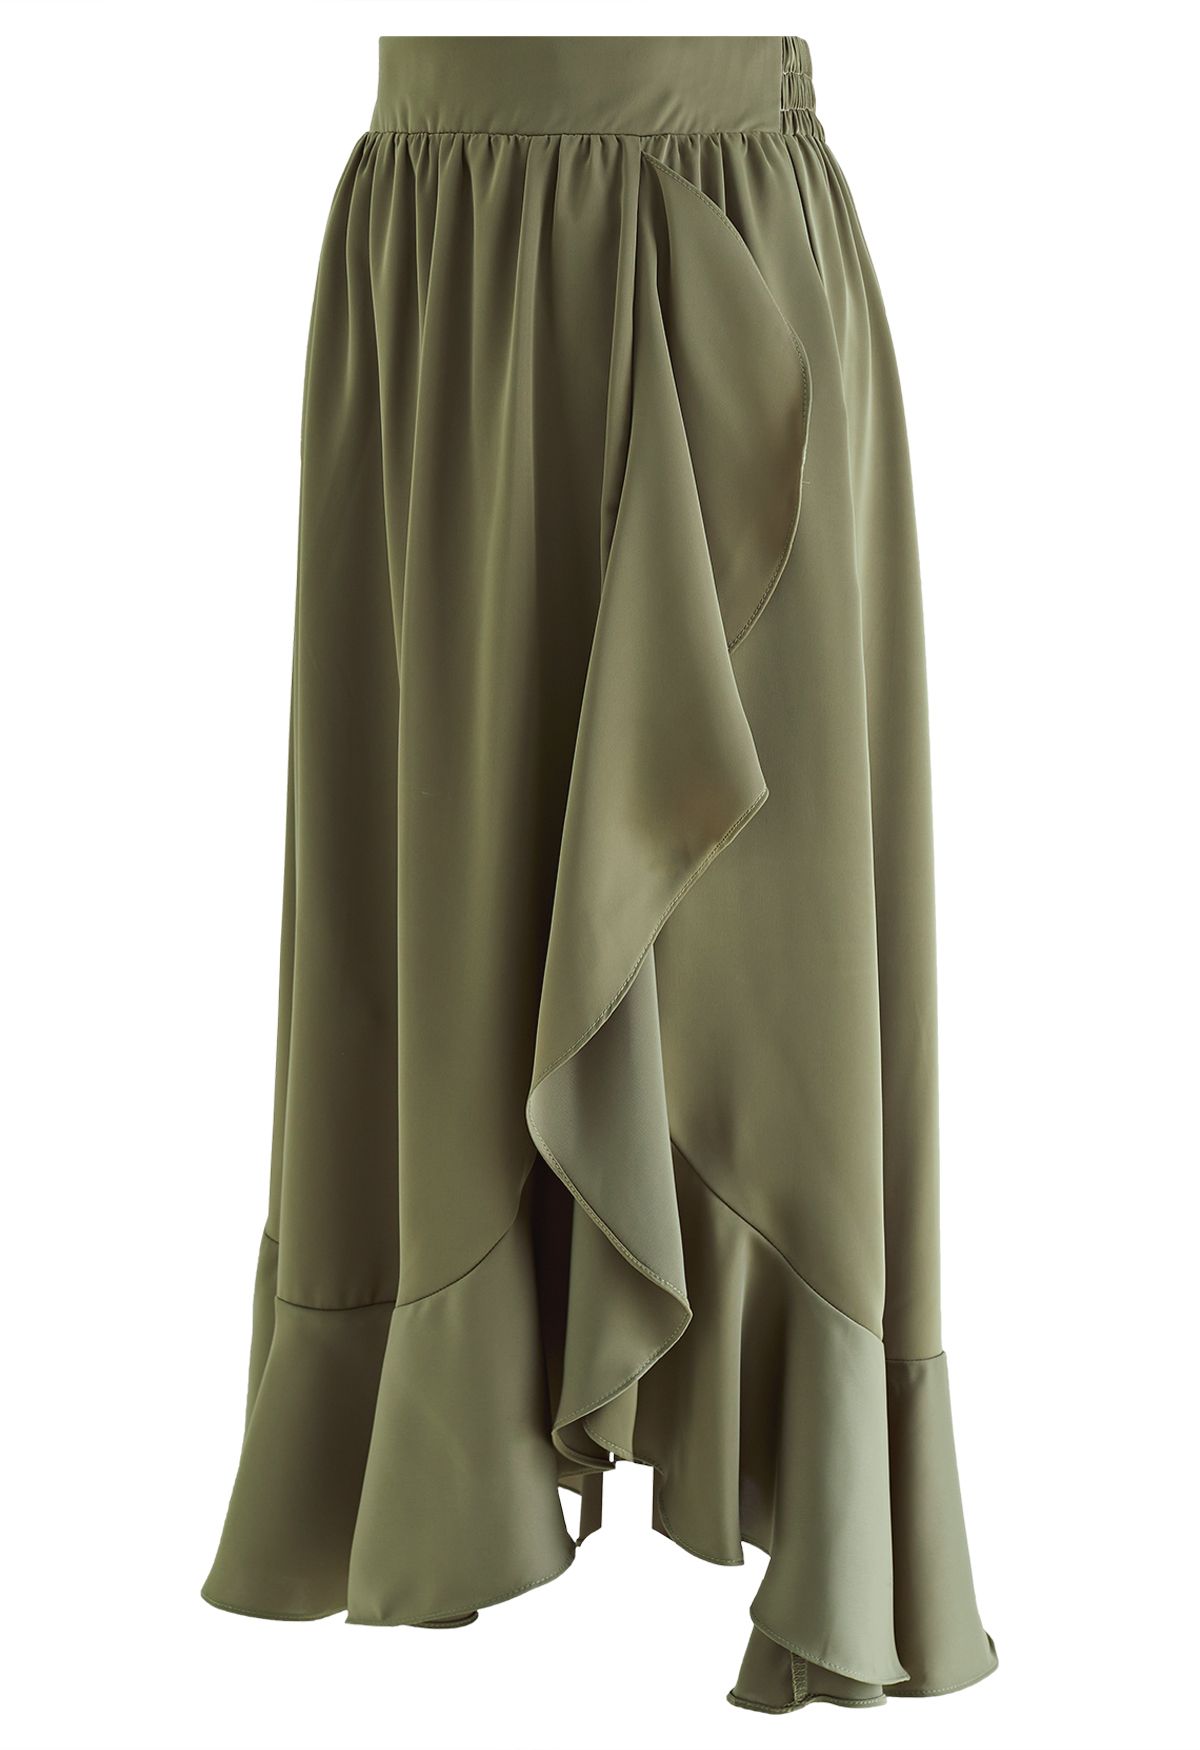 Ruffle Asymmetric Satin Midi Skirt in Olive